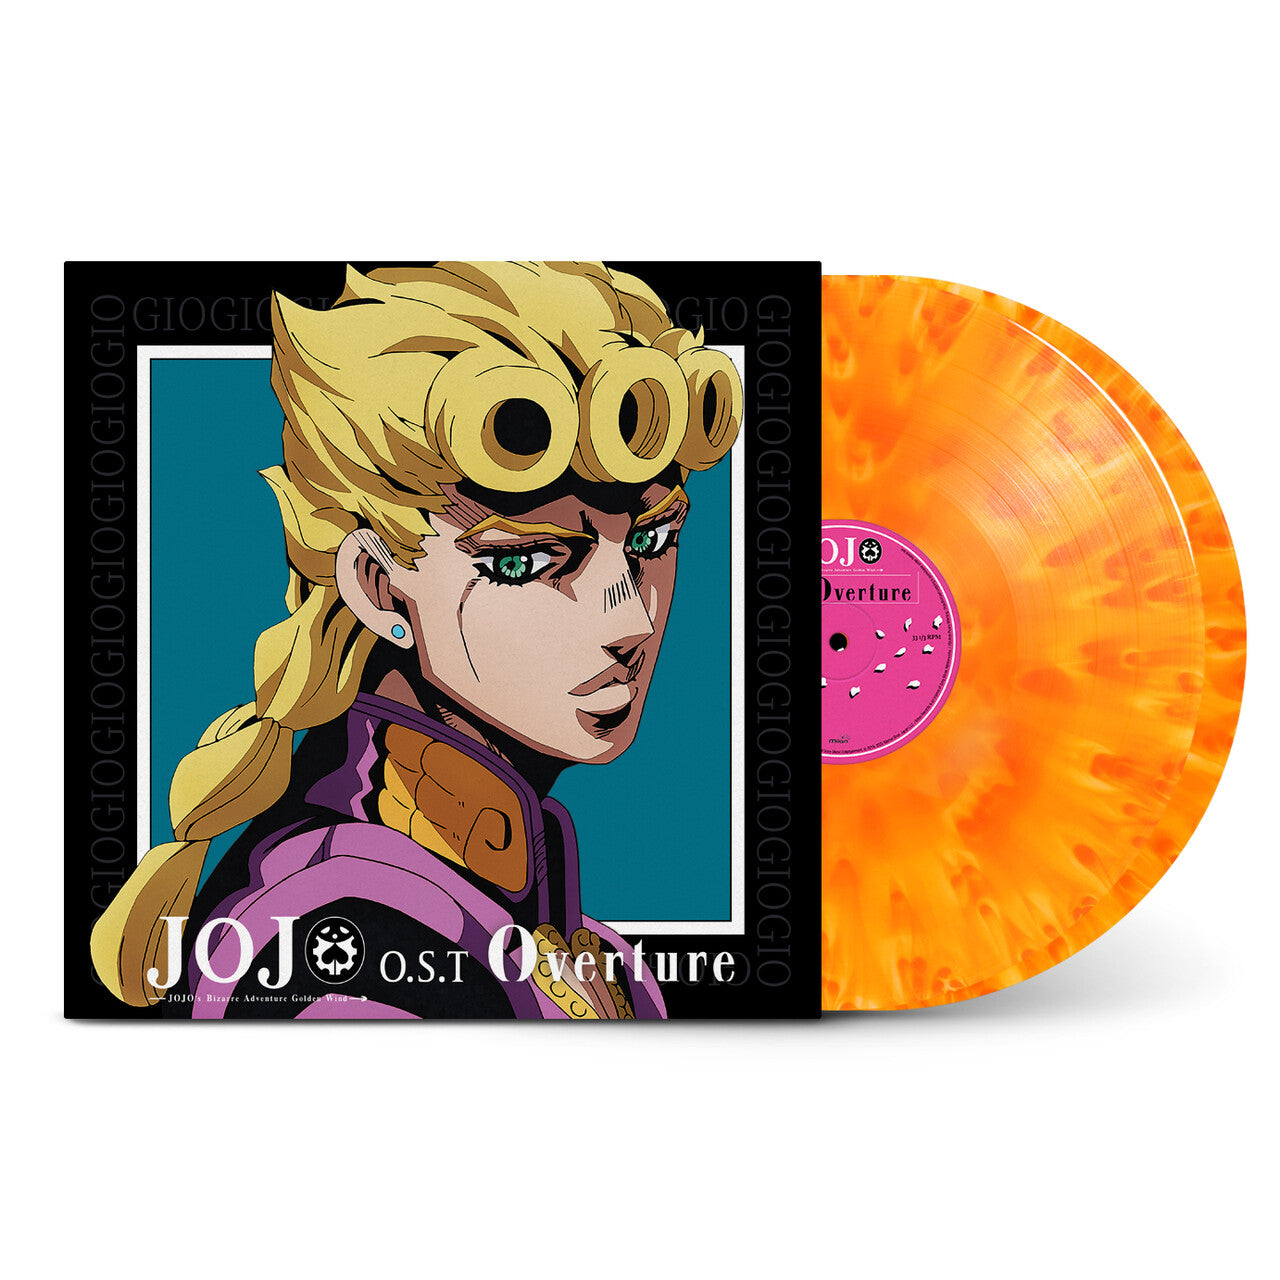 JoJo's Bizarre Adventure - Golden Wind O.S.T. Vol. 1 - Overture: Limited Orange + Yellow Blend Vinyl 2LP